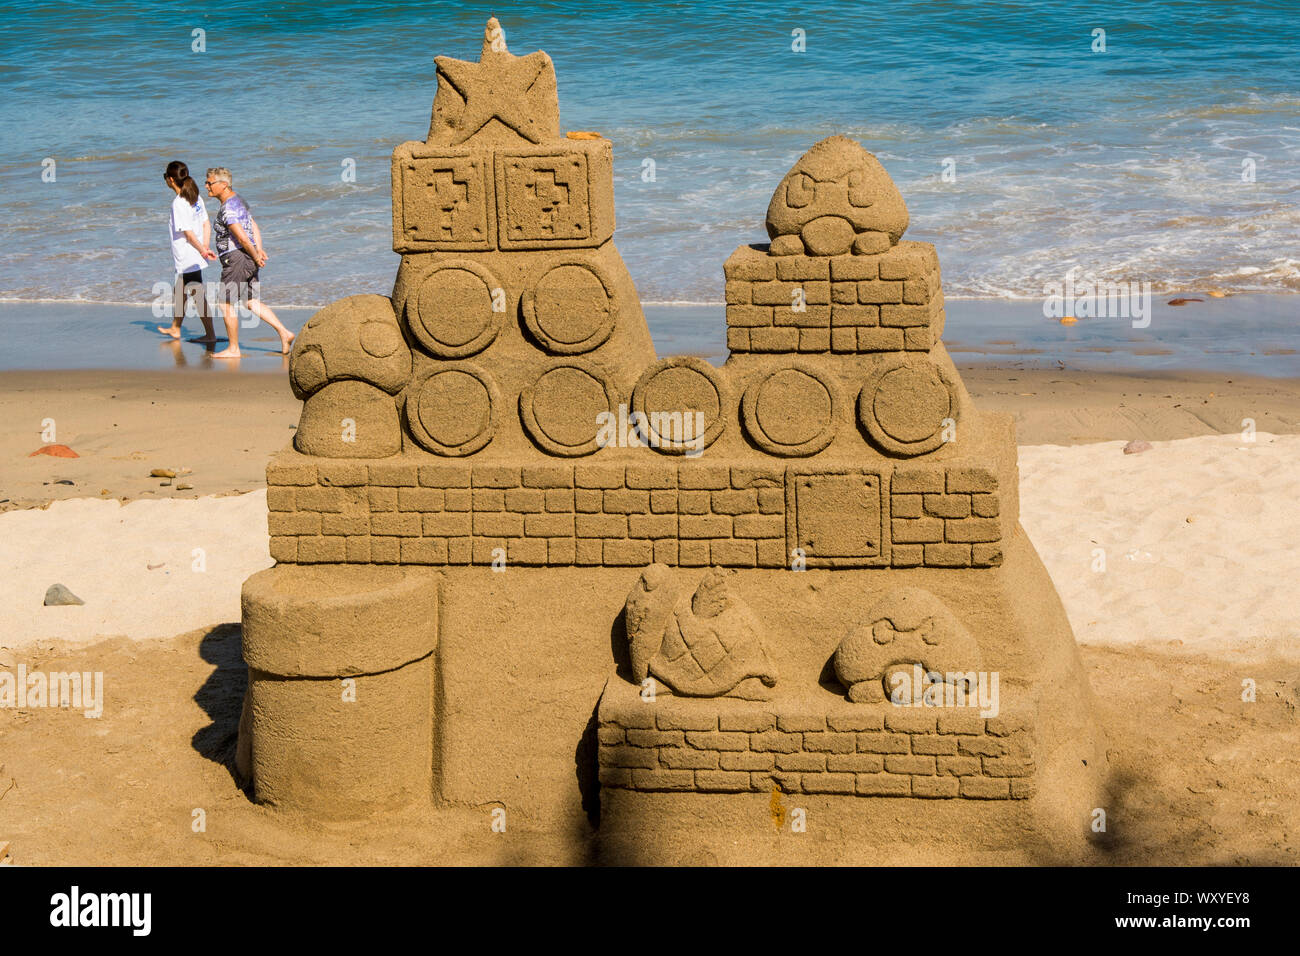 Sand sculptures on Playa Los Muertos beach, Puerto Vallarta, Jalisco, Mexico. Stock Photo